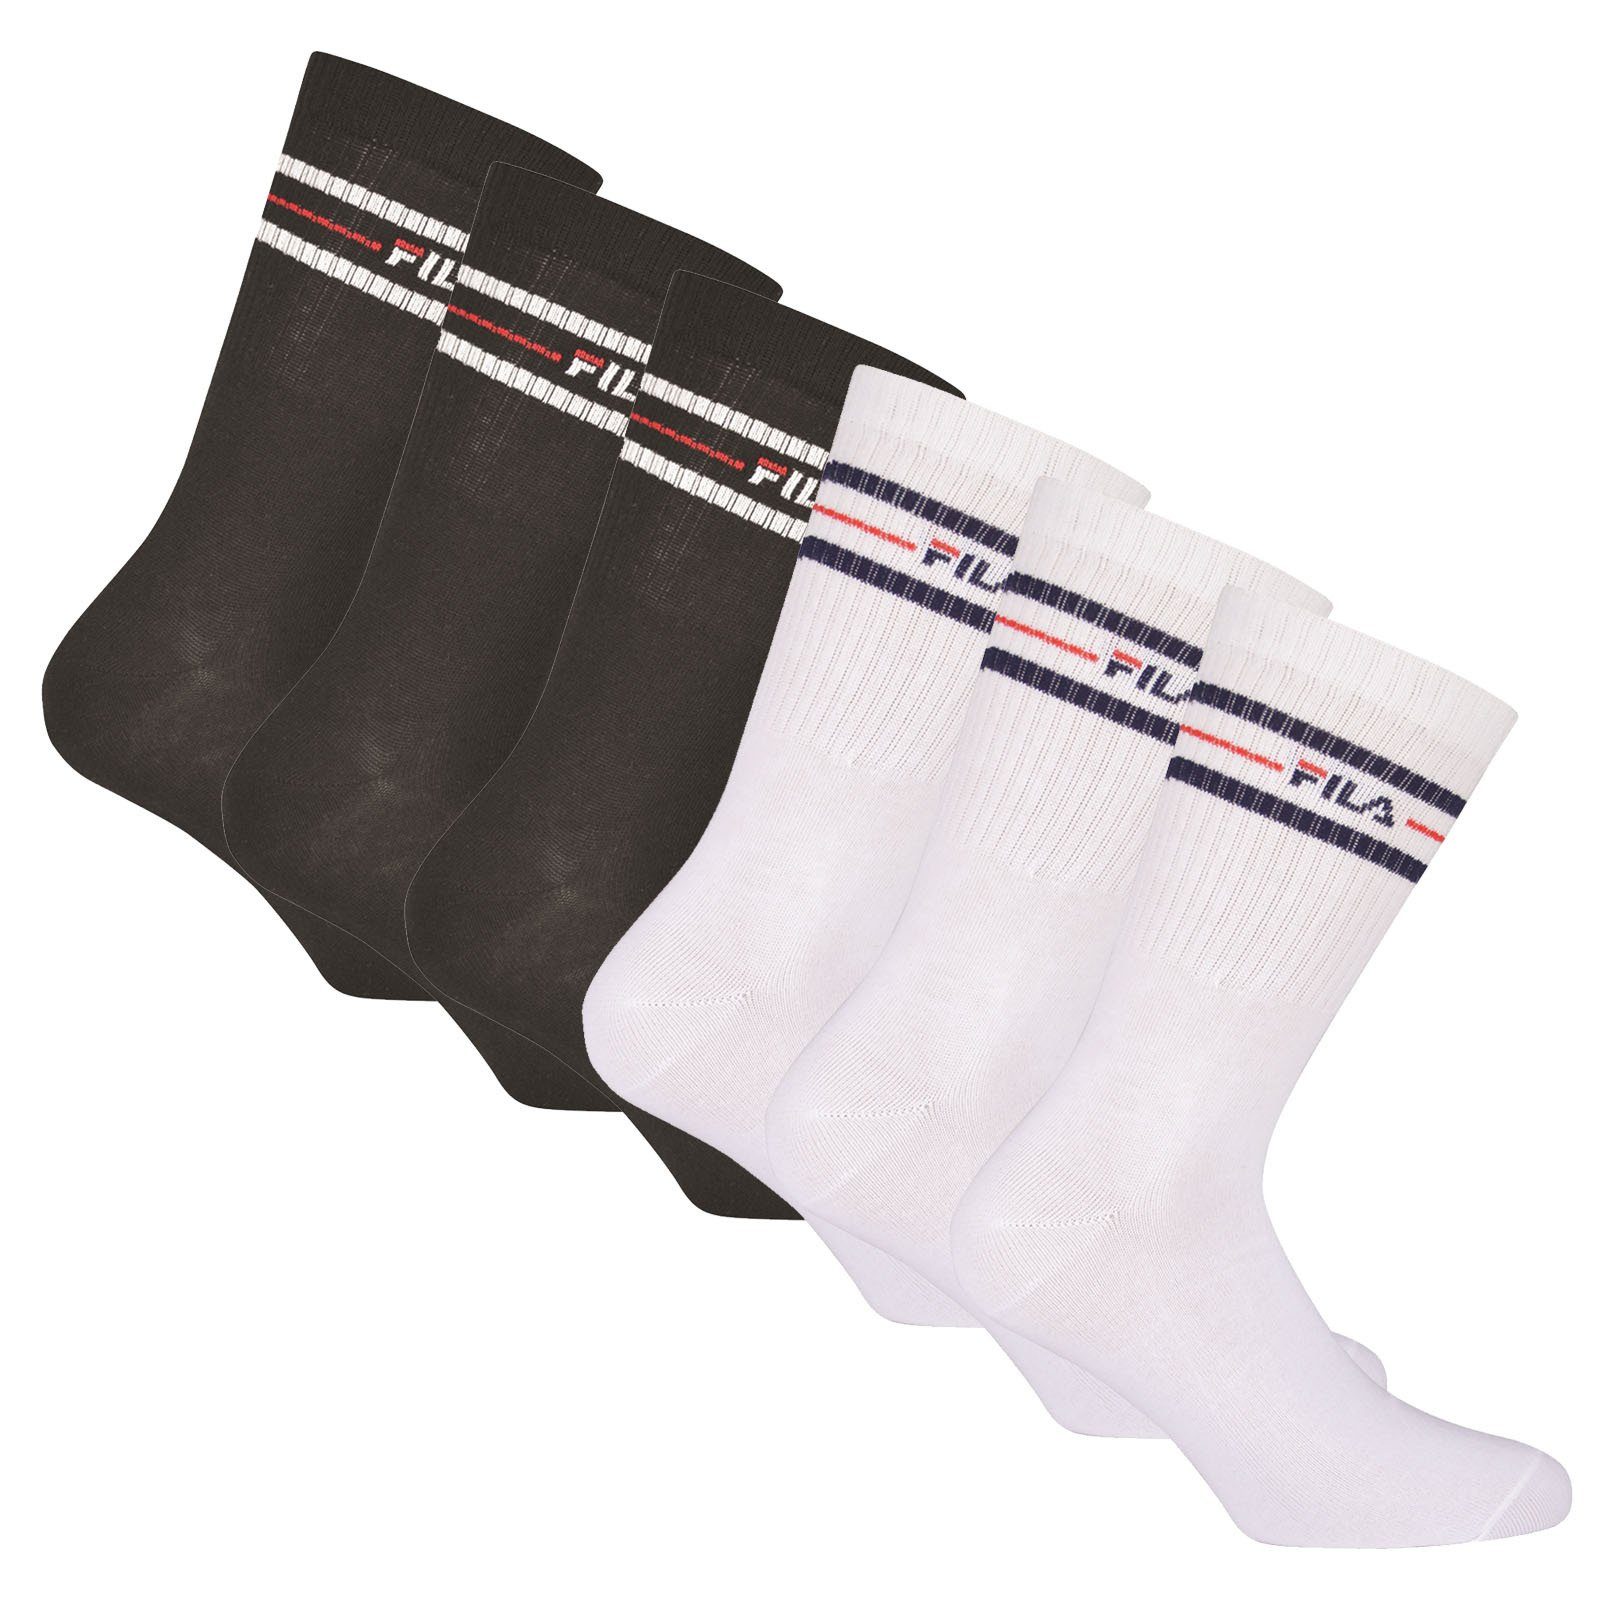 Unisex Schwarz/Weiß 6er Sportsocken Socken, Socks, Fila - Pack Strümpfe Crew